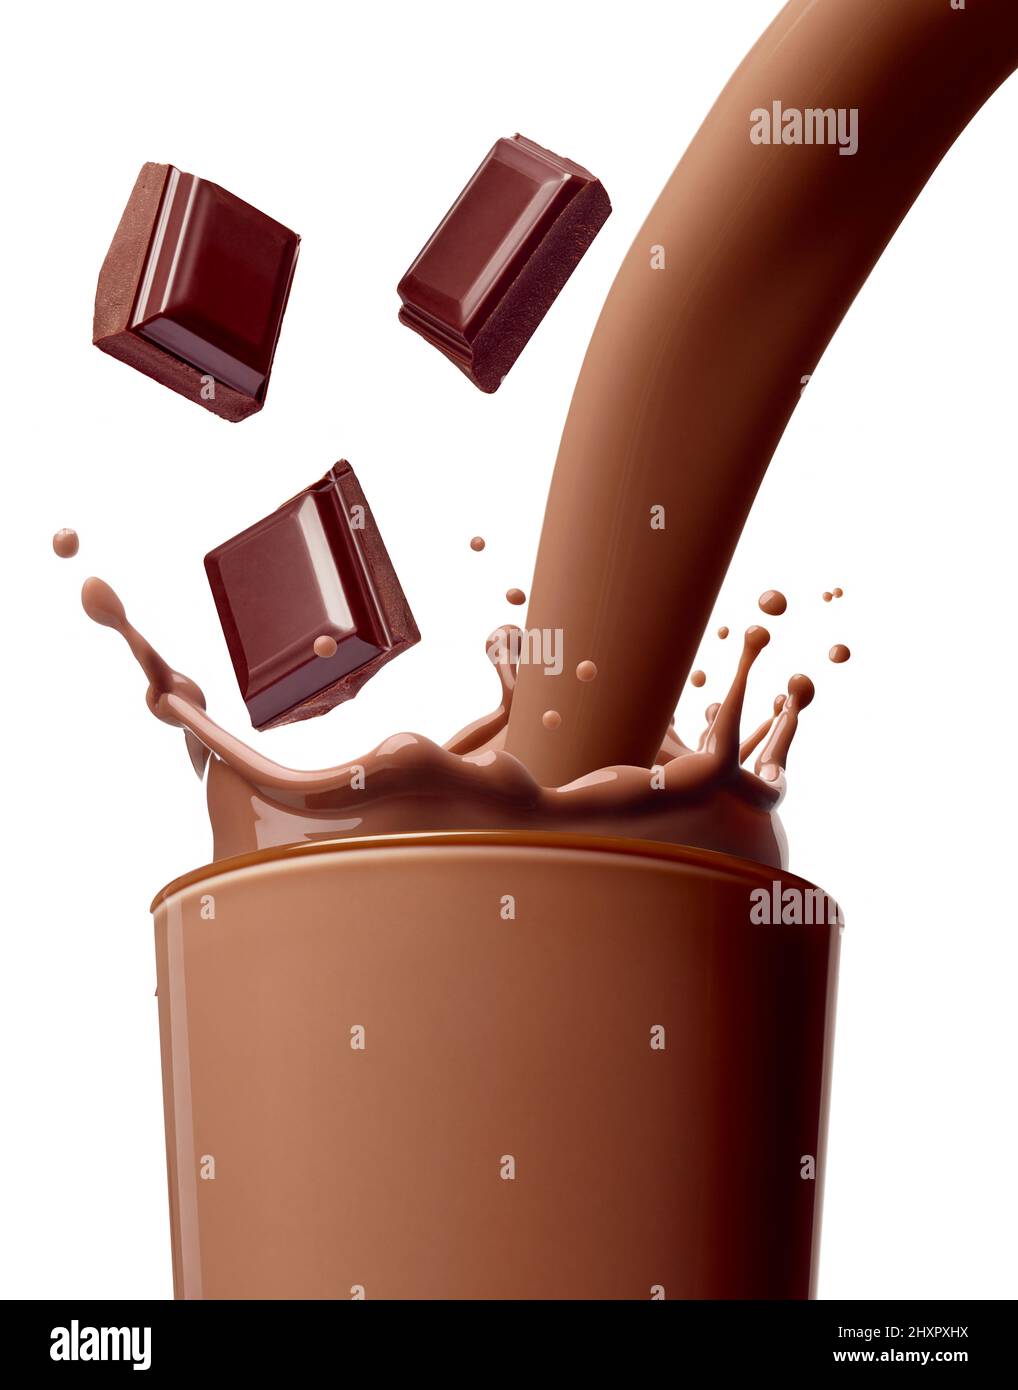 copa de chocolate con leche Foto de stock